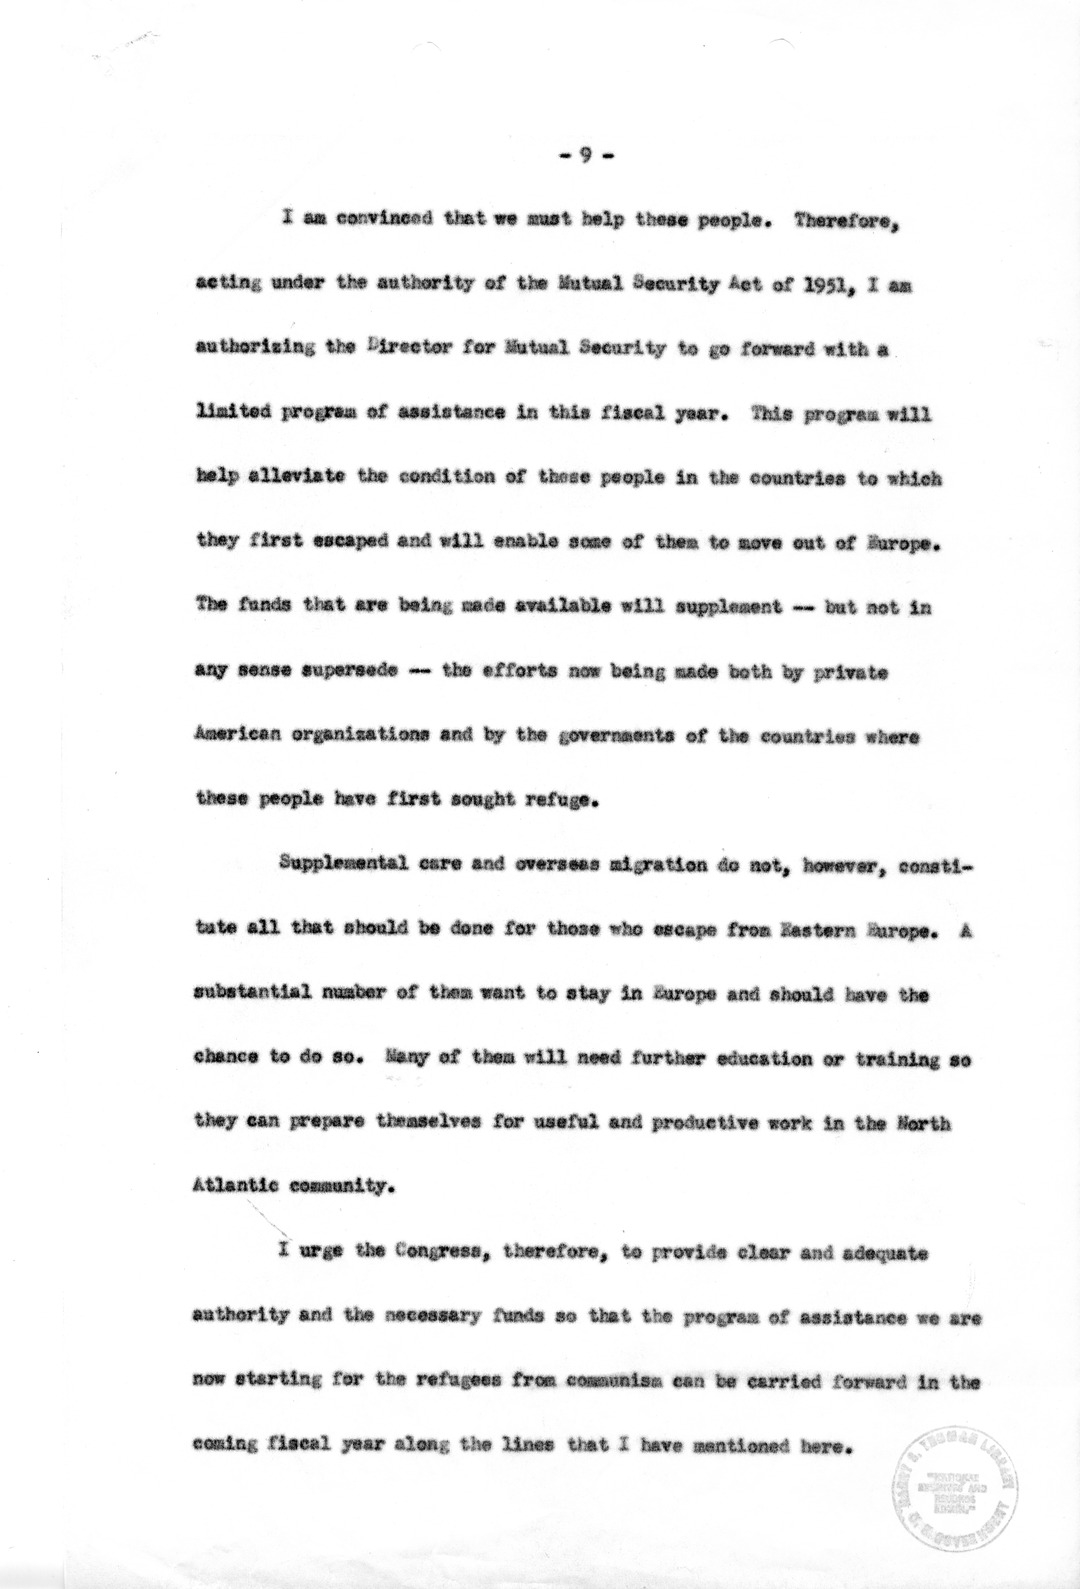 Memorandum From Richard Neustadt To Marshal Shulman, with Attachment